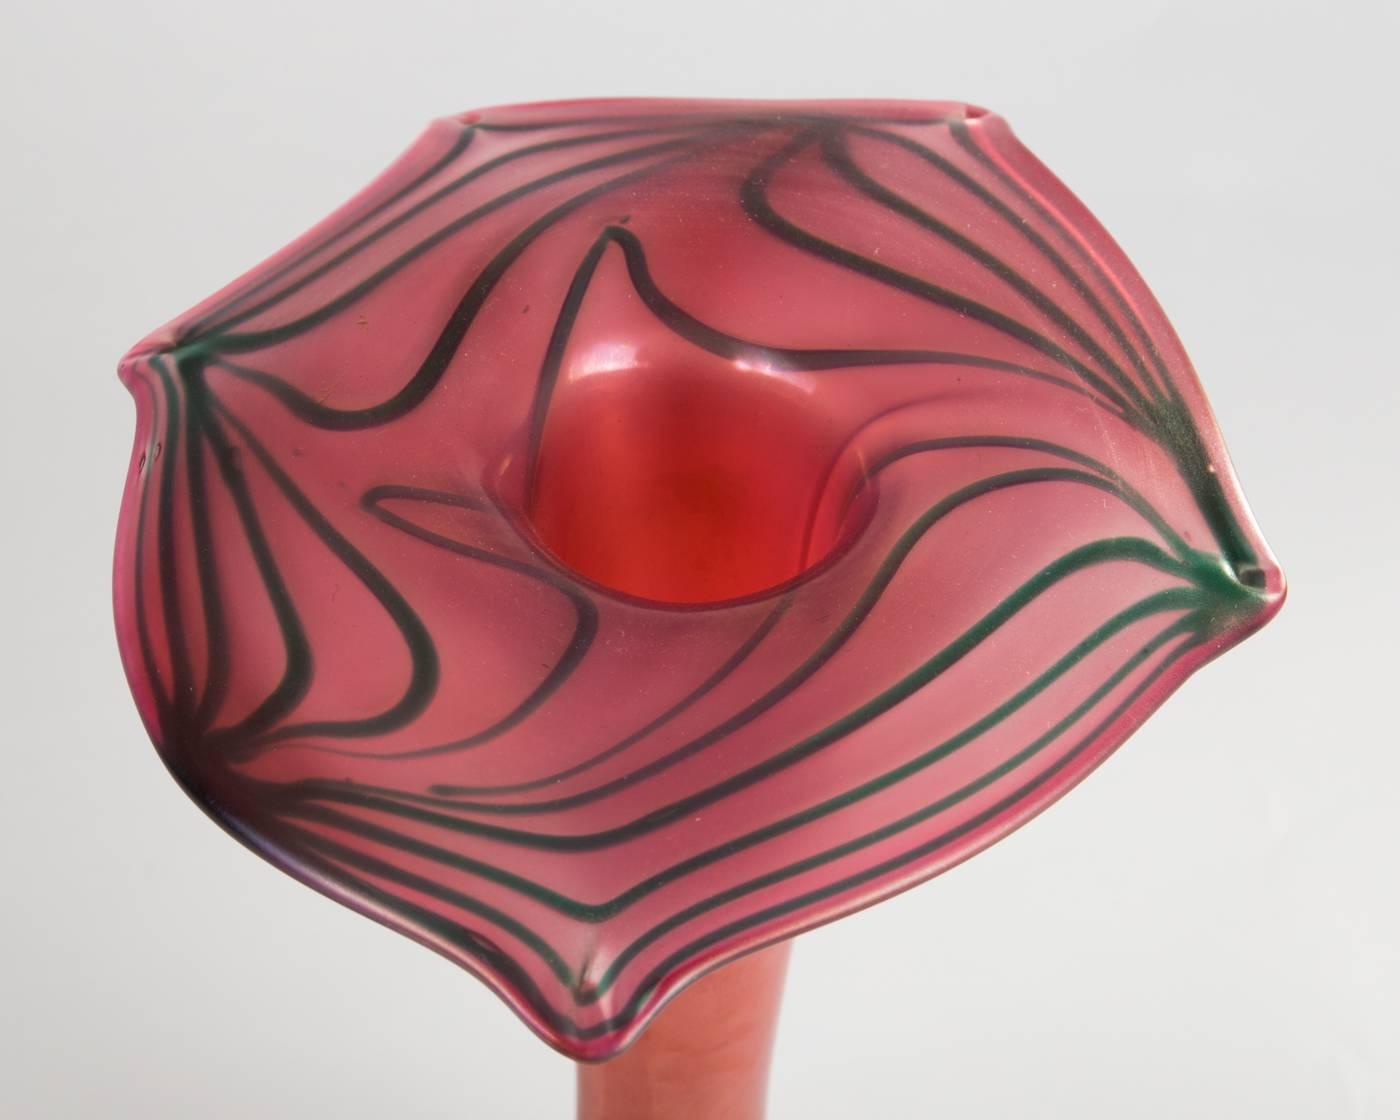 Art Glass Art Nouveau Bohemian Glass Vase with Spiral Melting by Kralik For Sale